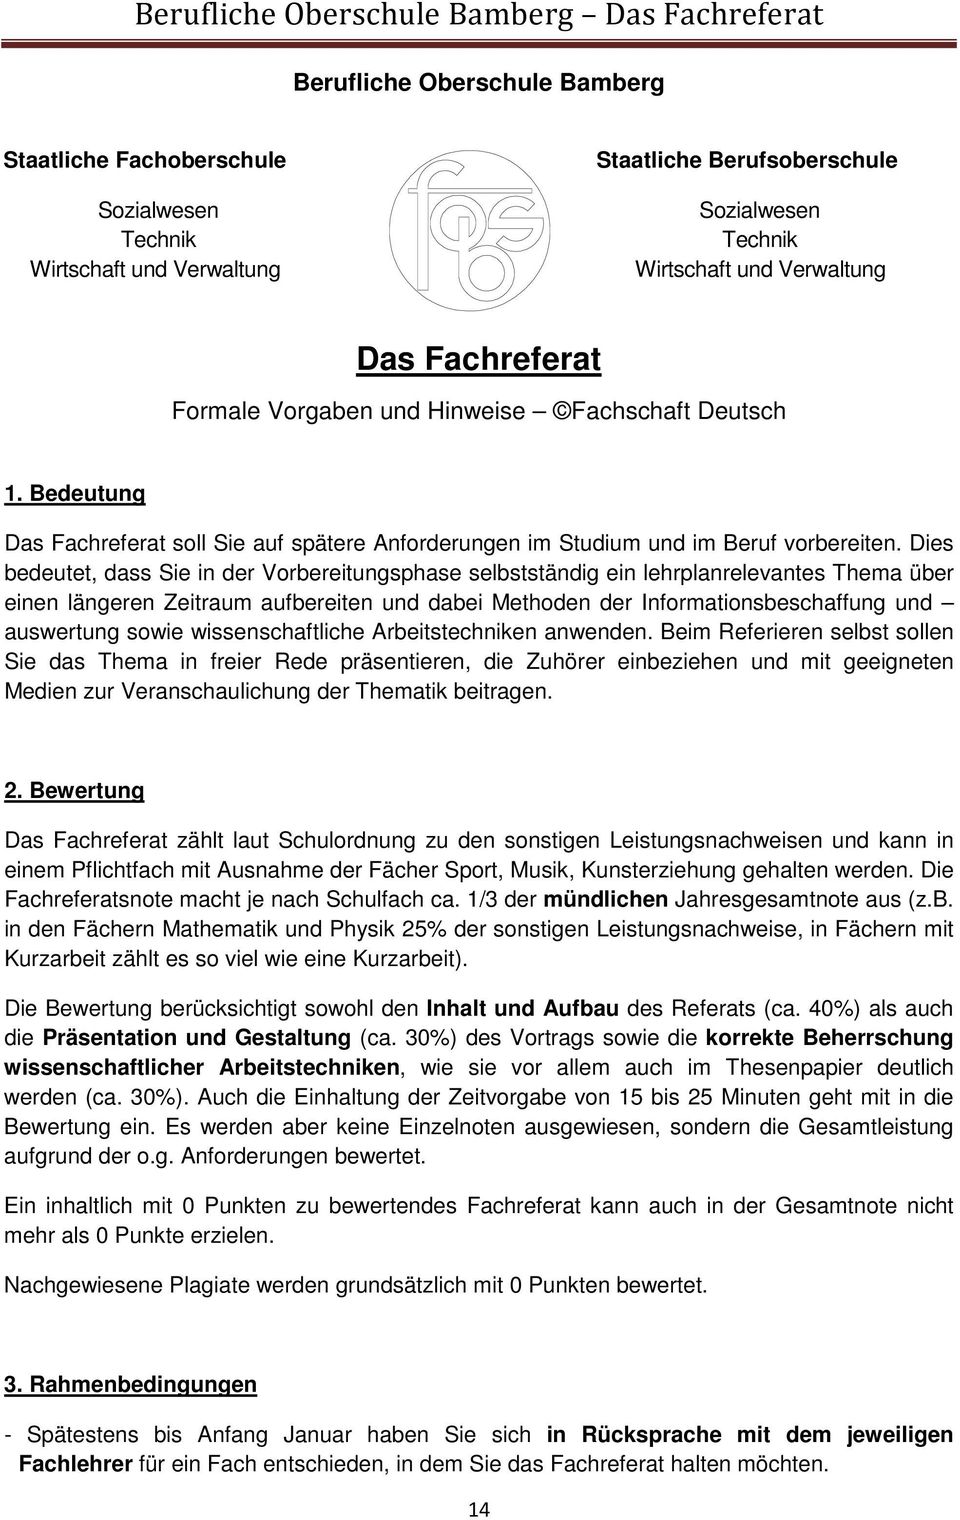 Berufliche Oberschule Bamberg Das Fachreferat Pdf Free Download